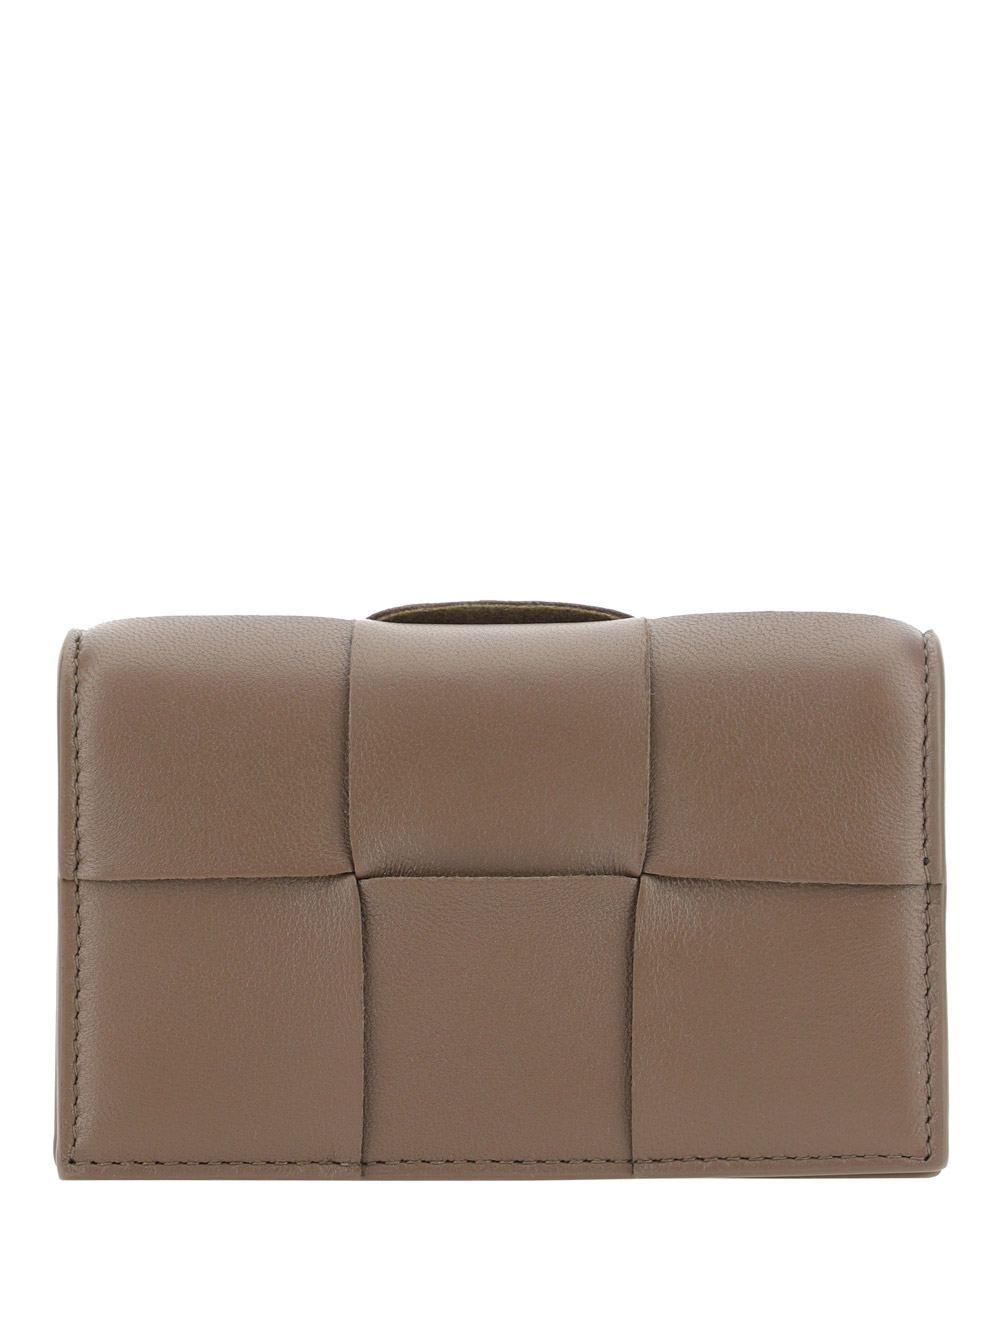 Bottega Veneta Portacard Leather Credit Card Case In Taupe/grey/gold